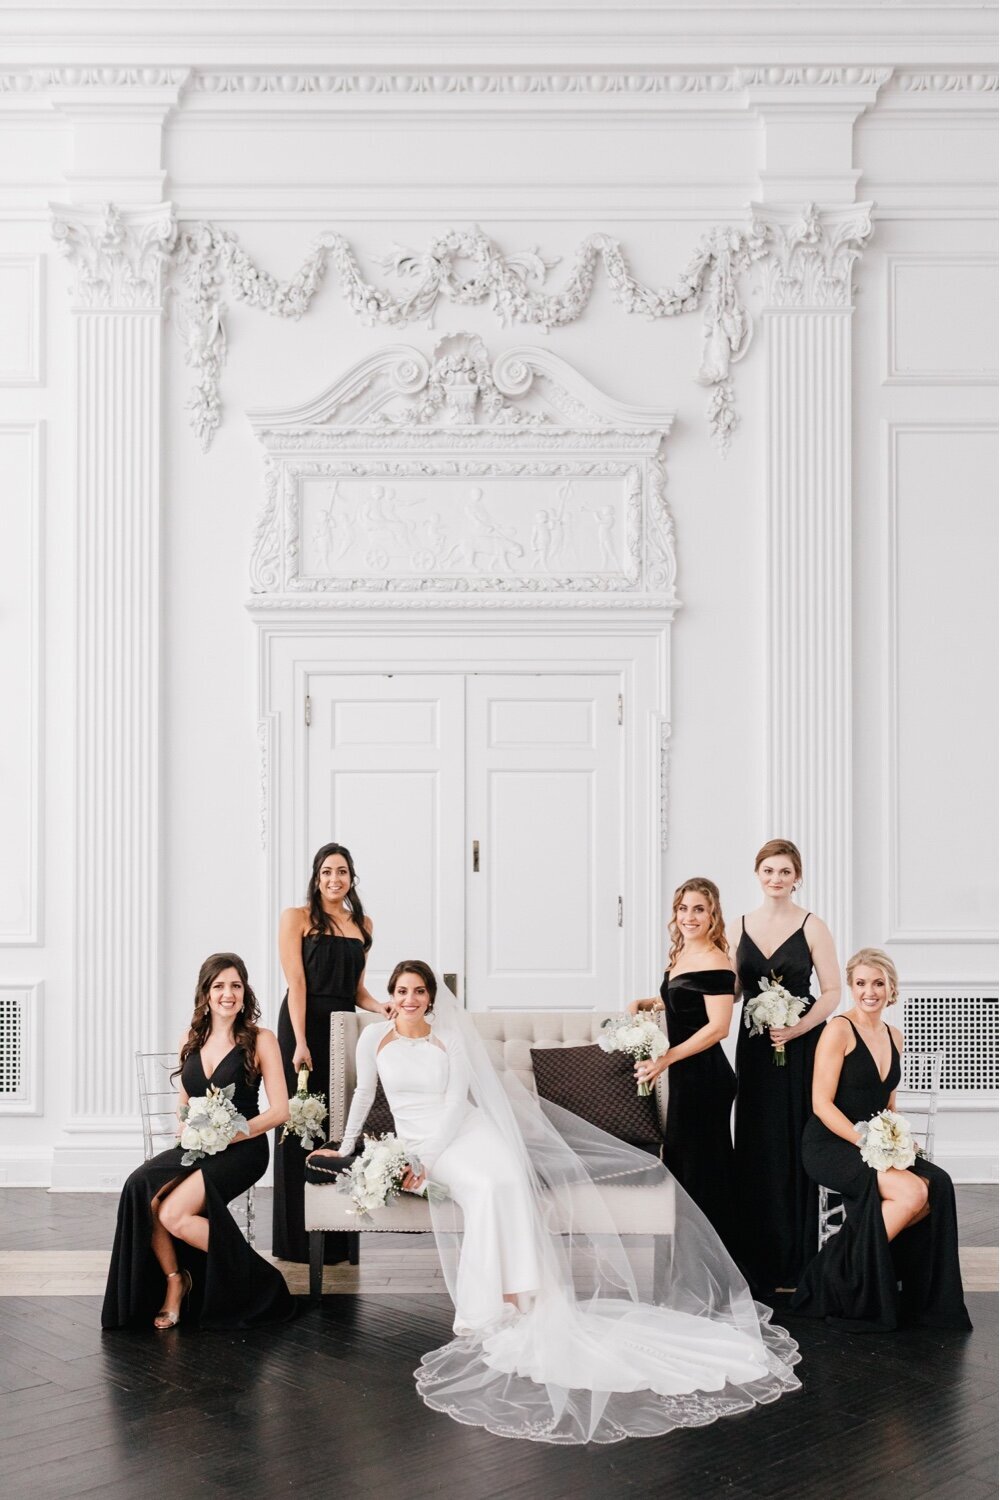 094_Philadelphia-wedding_new-years-eve-wedding_vogue-wedding_bridesmaid-black-dress